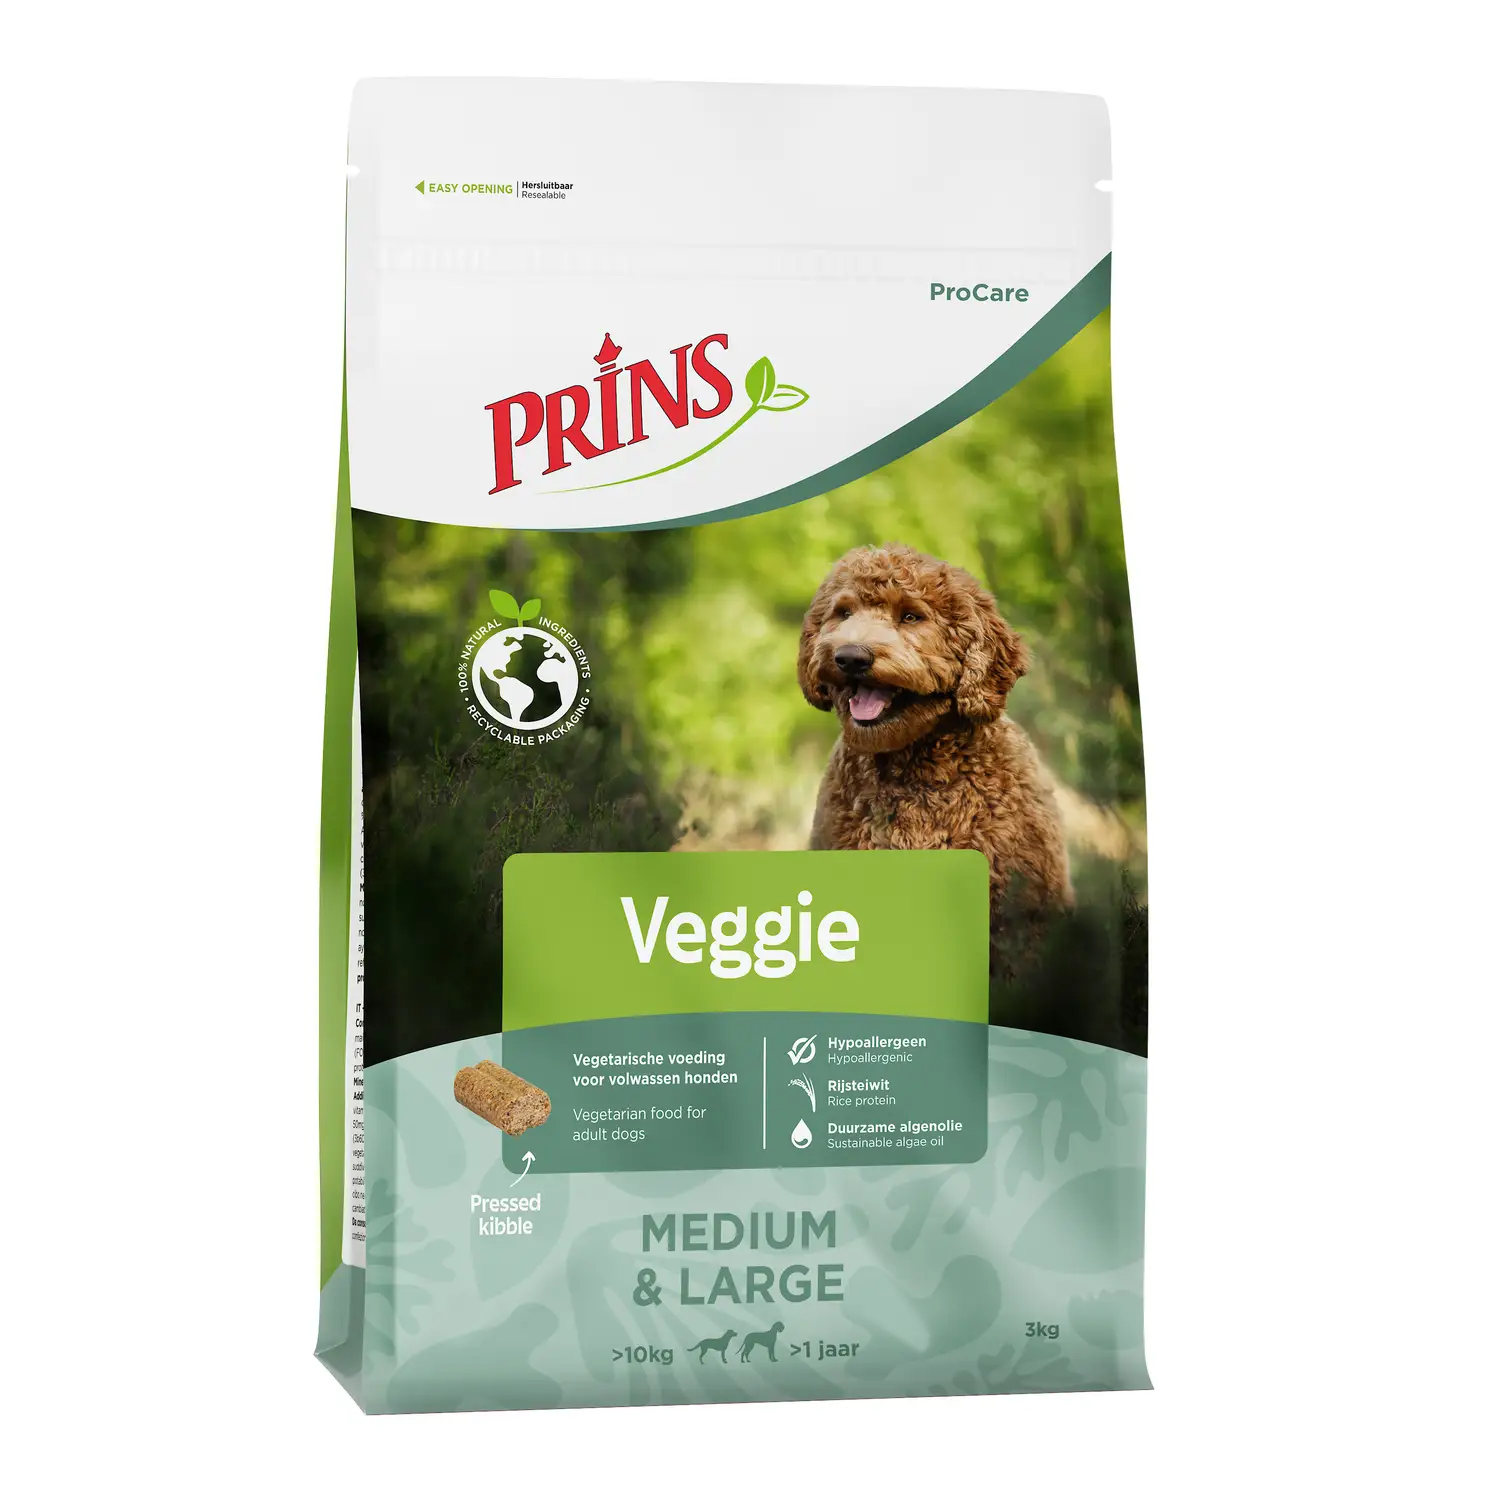 https://media.prinspetfoods.net/products/large/prins-procare-veggie.webp